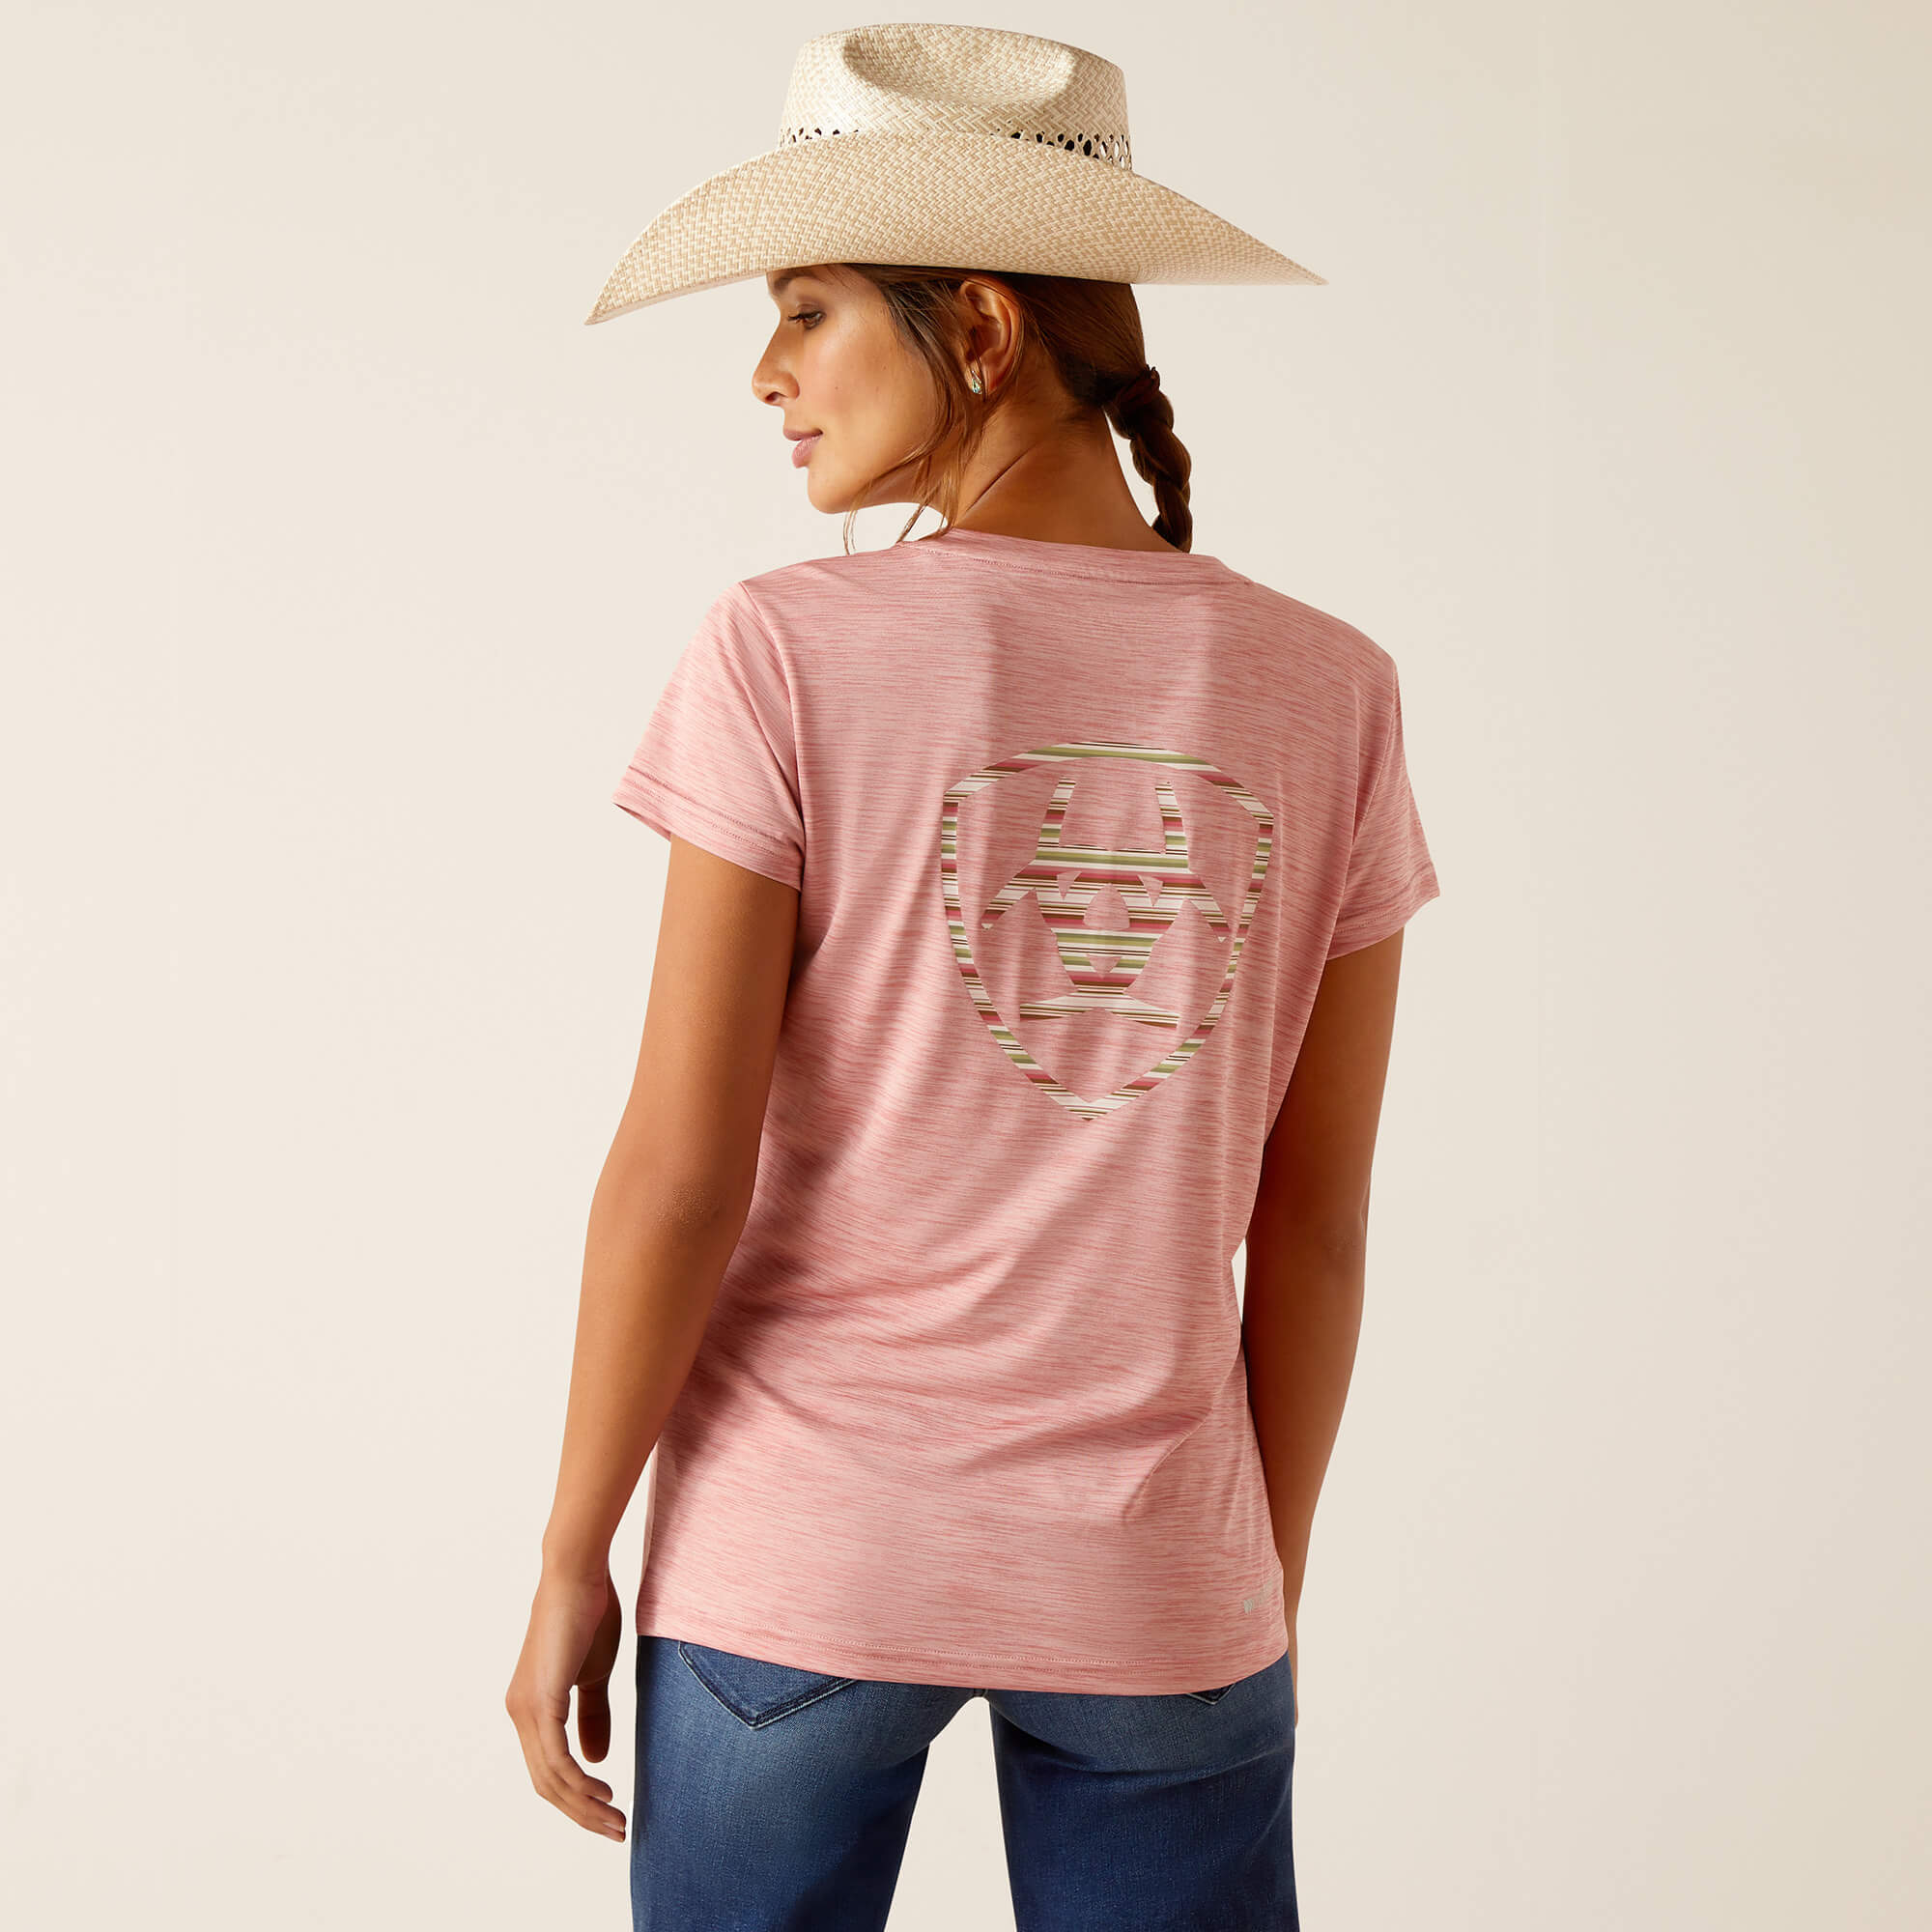 tee-shirt equitation western femme ariat laguna rose